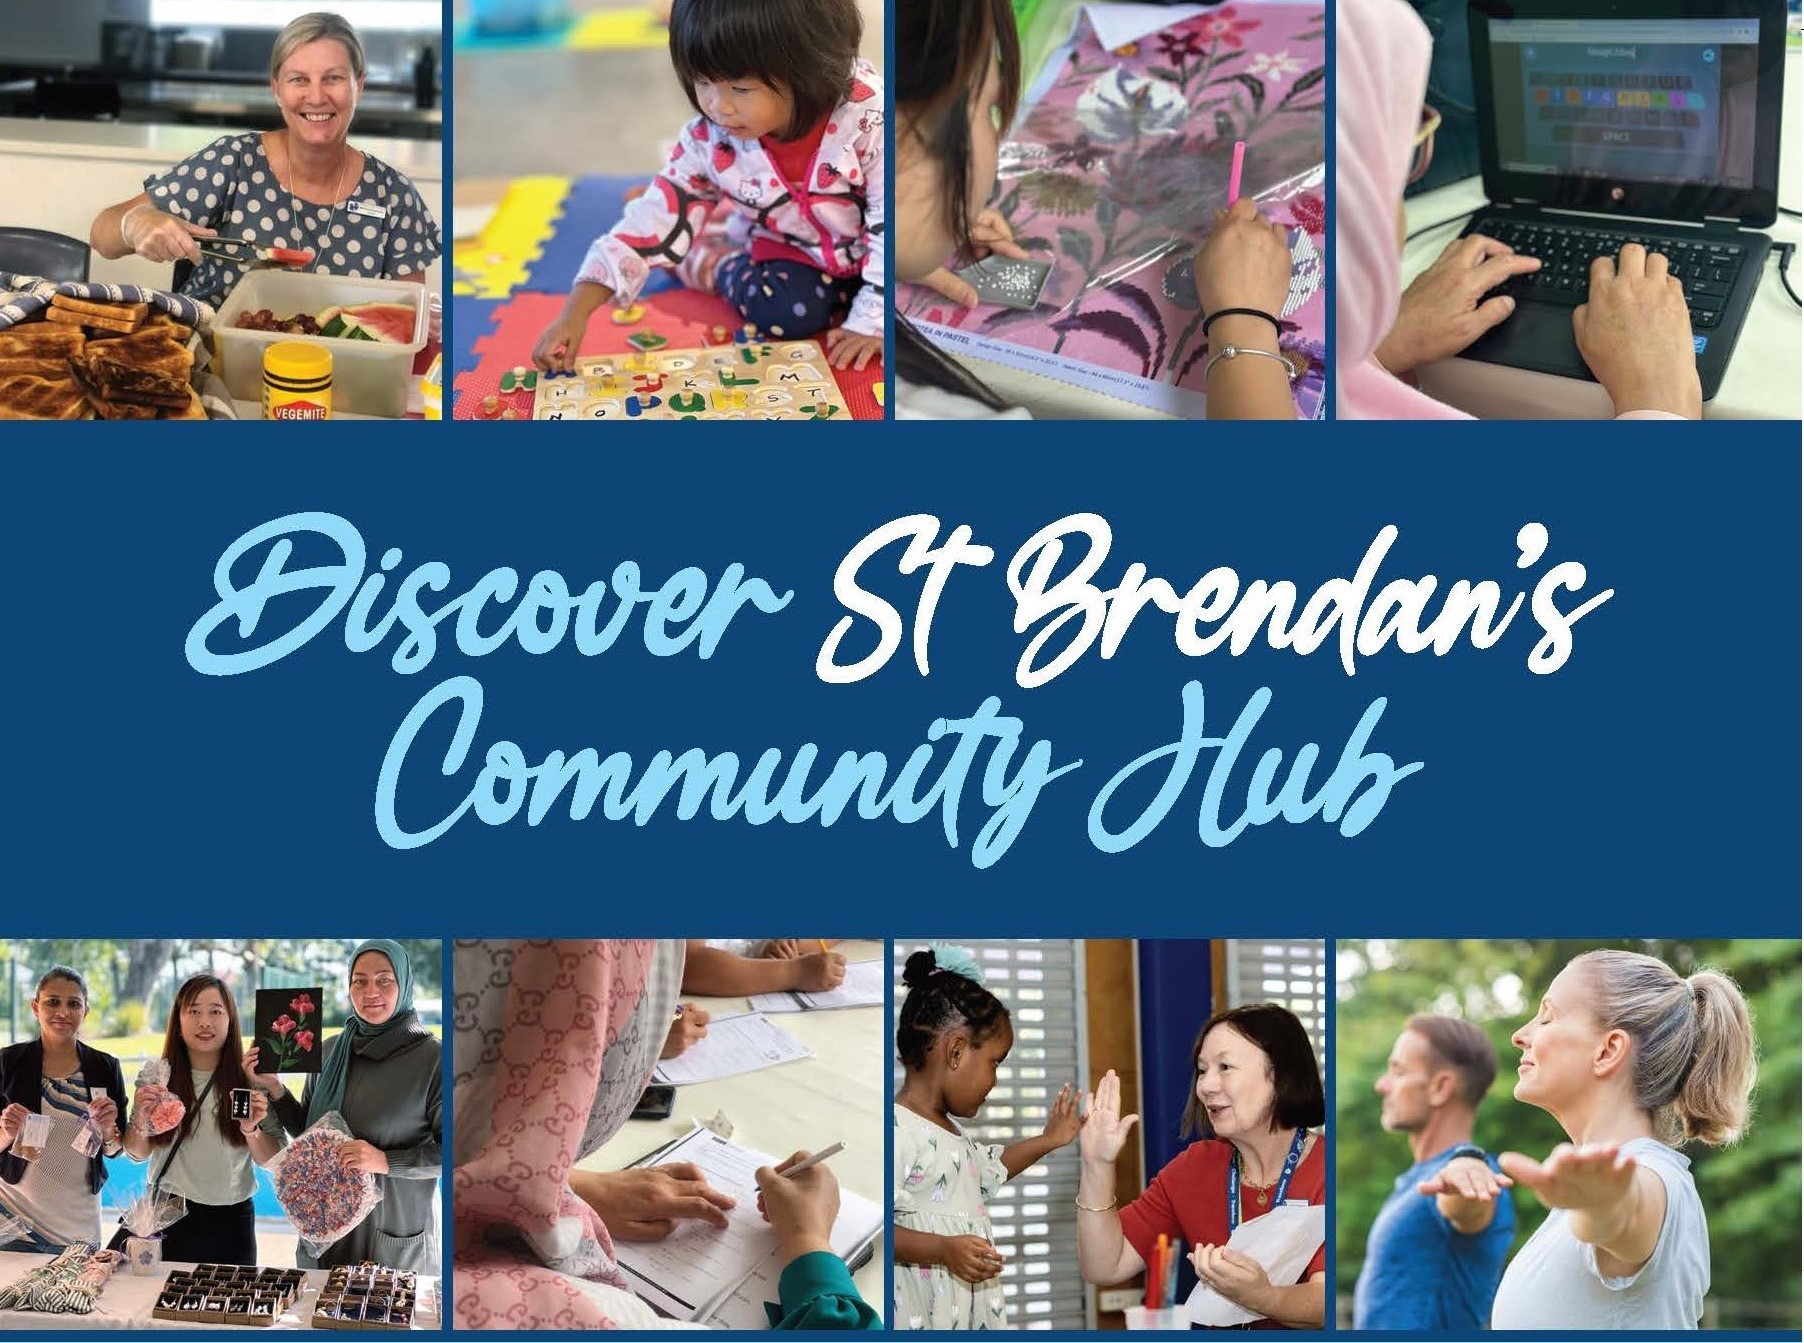 9356-BCE-St Brendan's Community Hub-Flyers-A5-OL-Hub - Copy - Copy.jpg